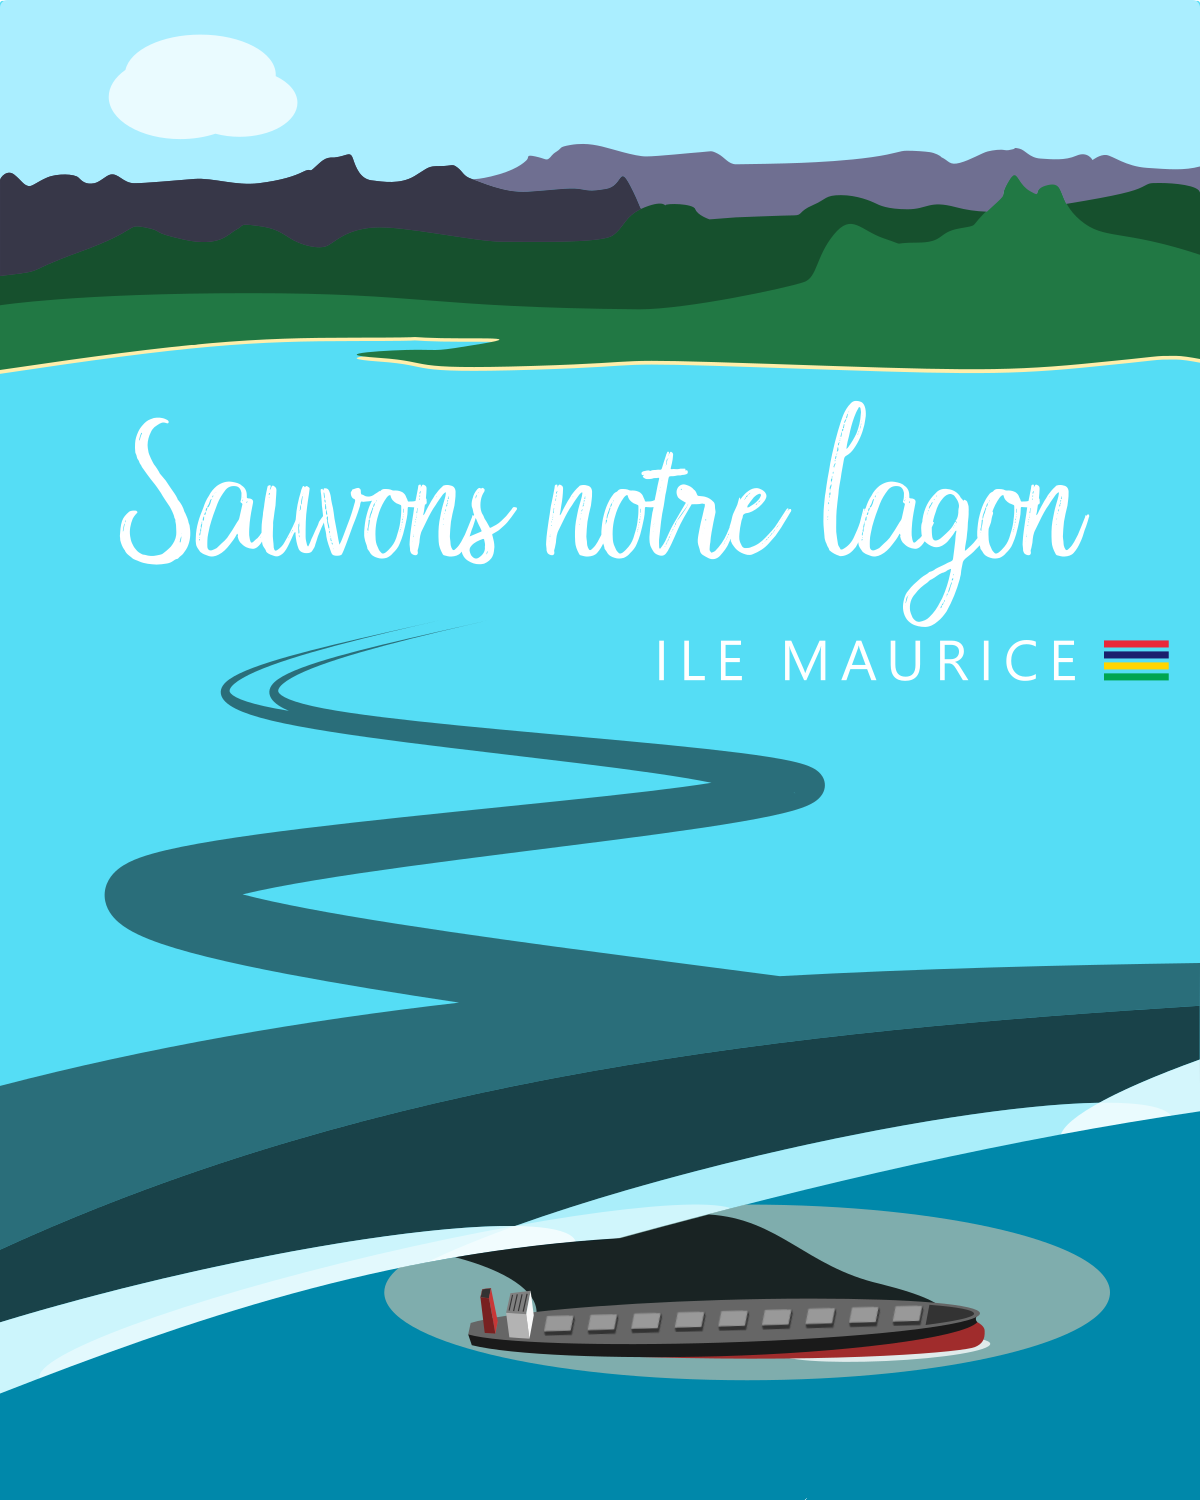 Kotomili Mauritius Sauvons notre lagon